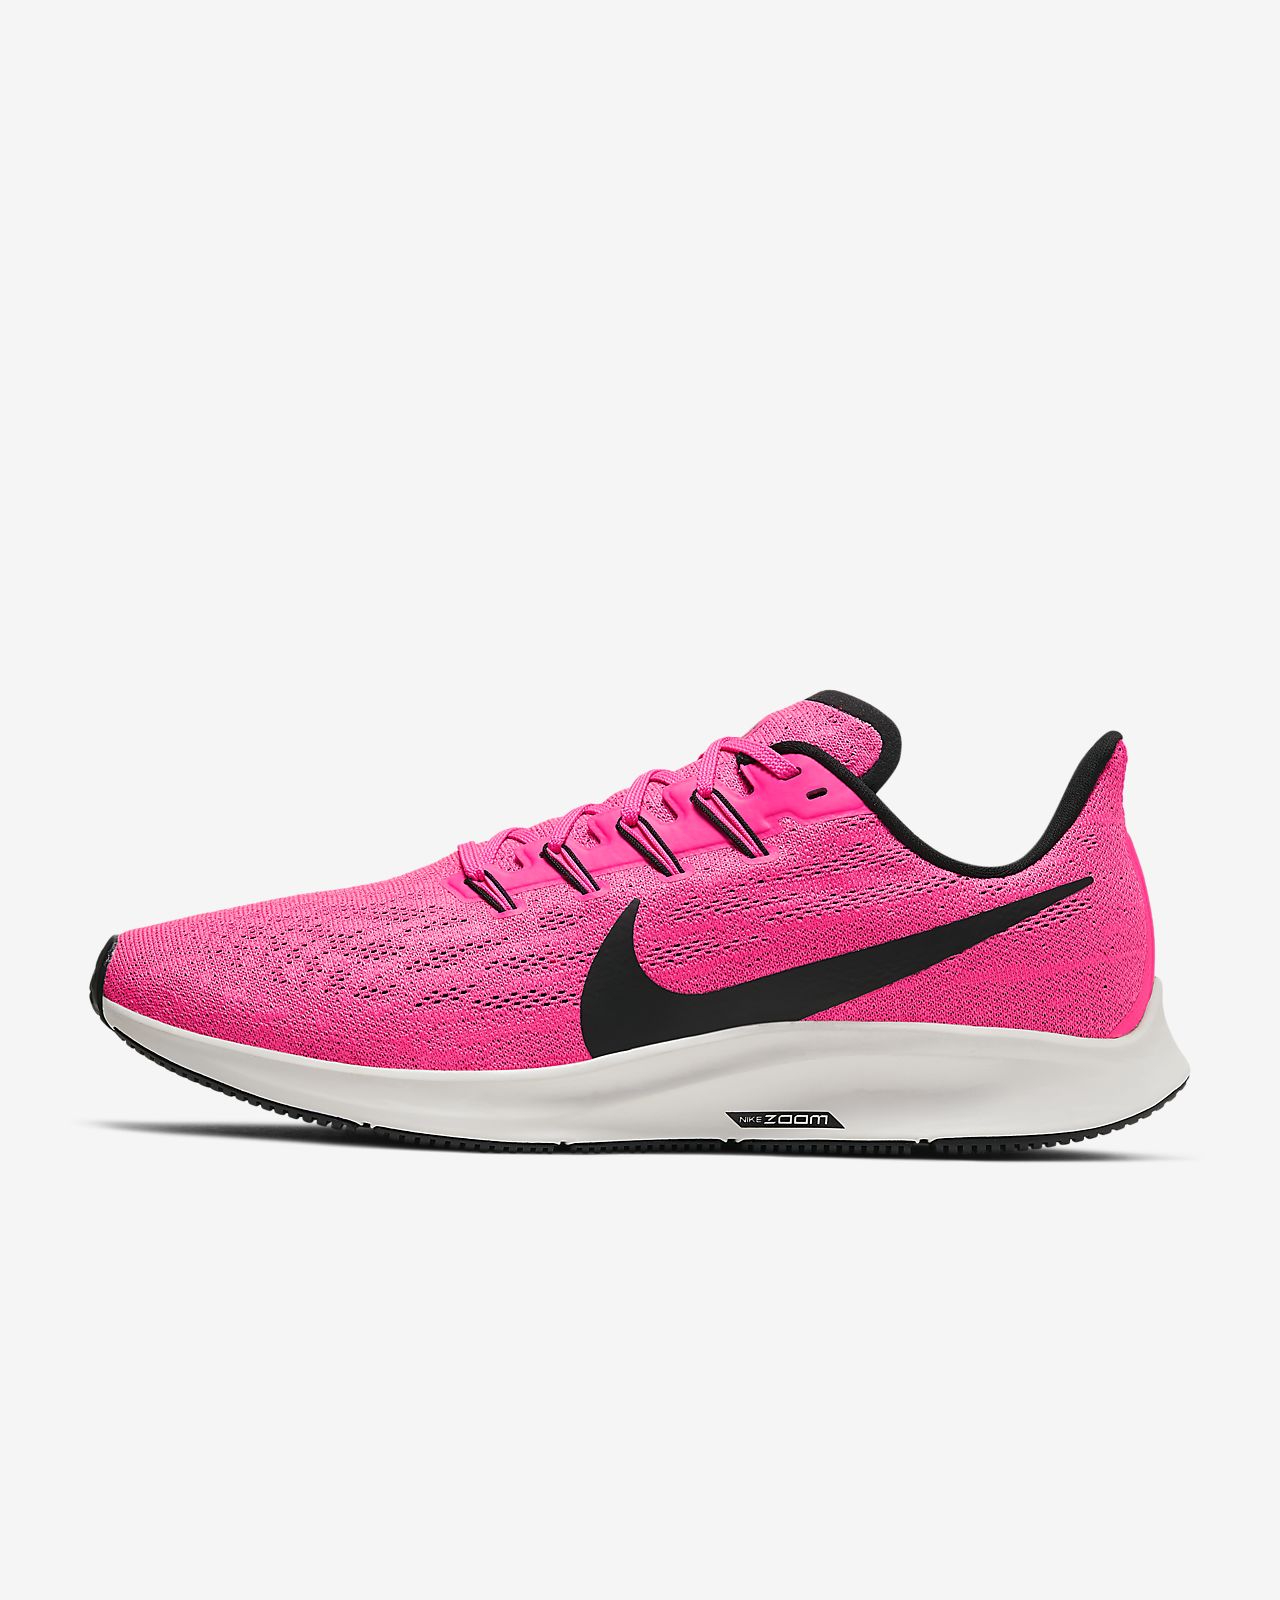 mens pink nike running shoes